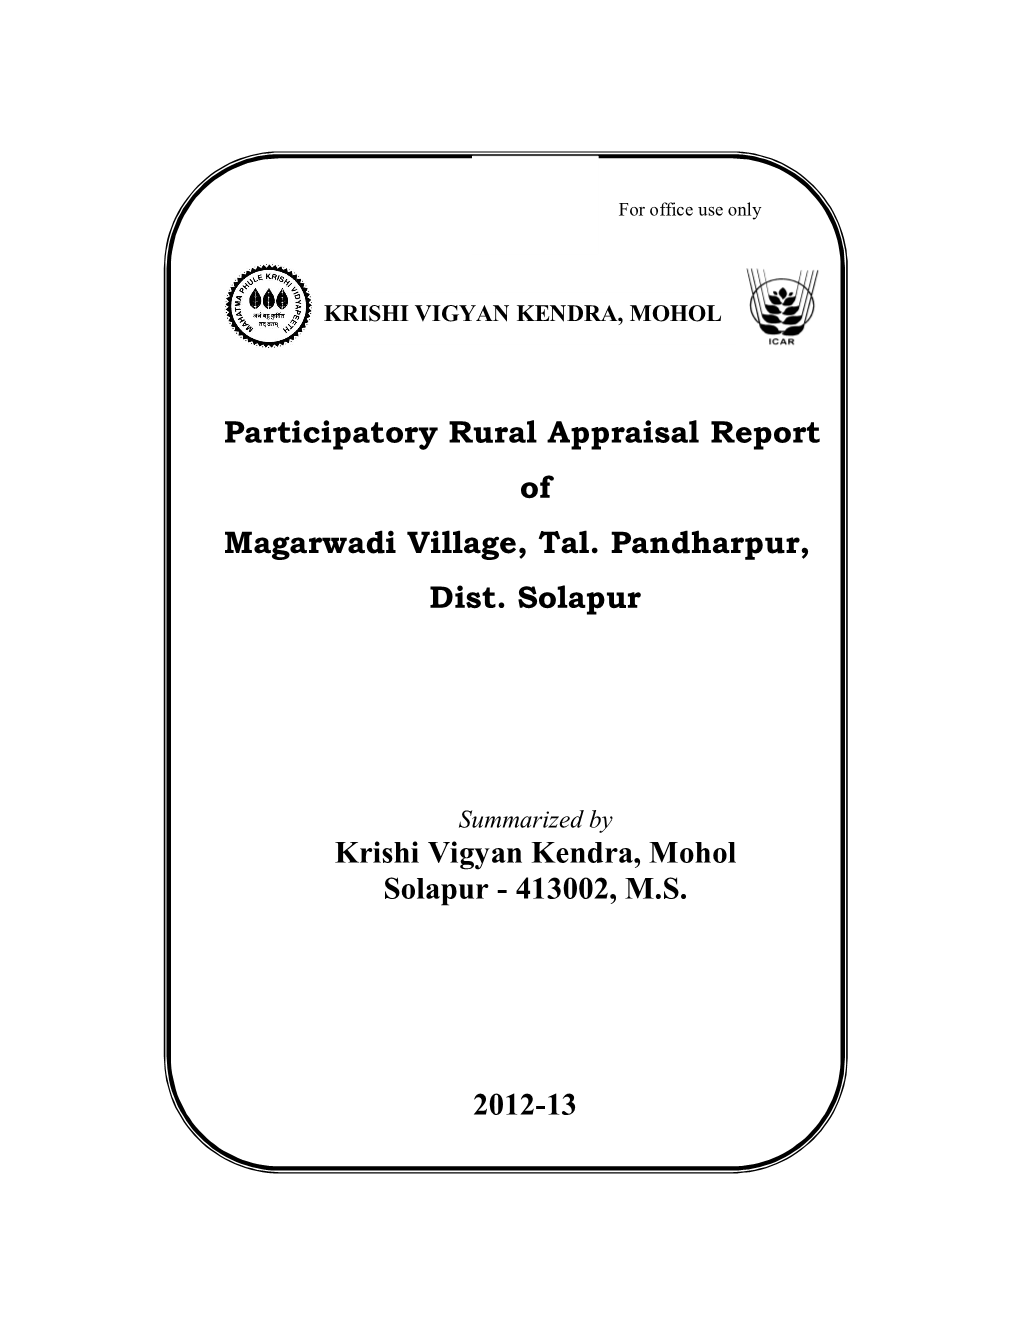 Participatory Rural Appraisal Report of Magarwadi Village, Tal